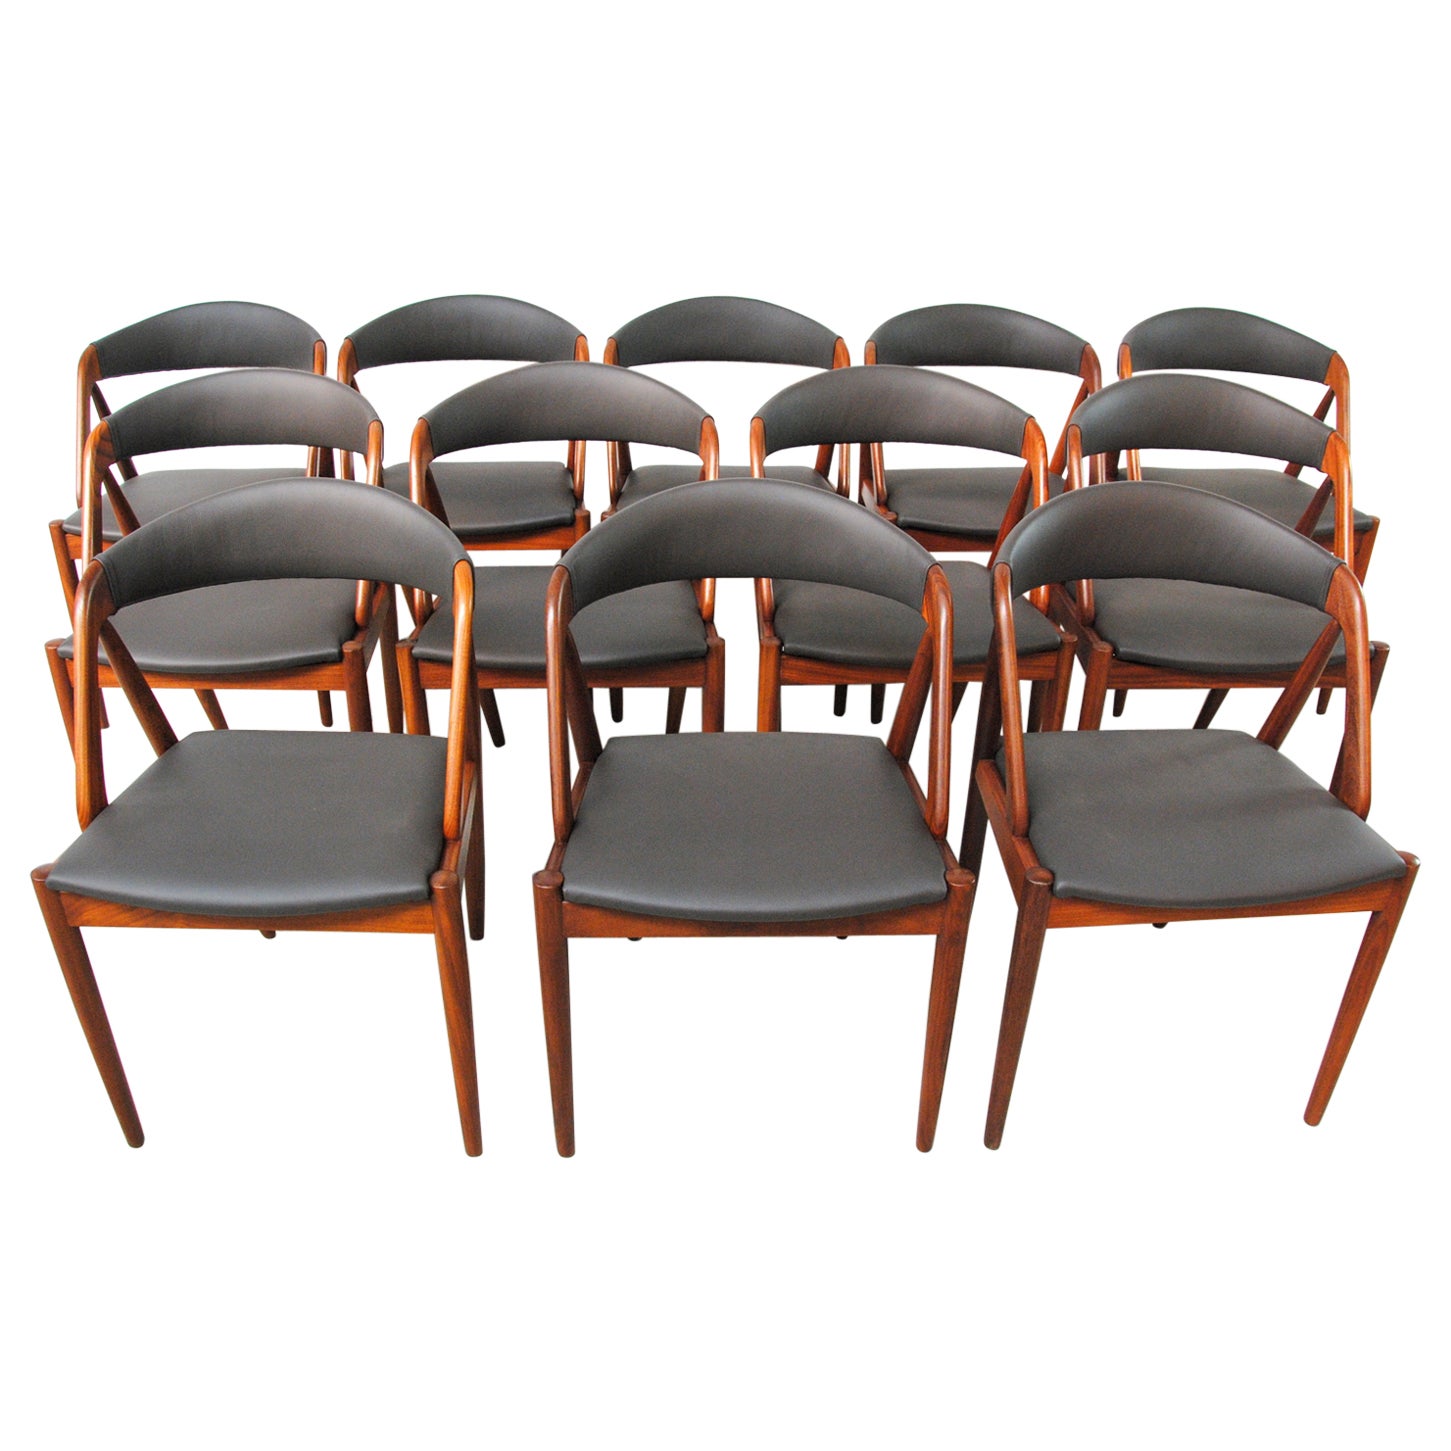 Kai Kristiansen Set of Twelve Restored Teak Dining Chairs, Custom Upholstery